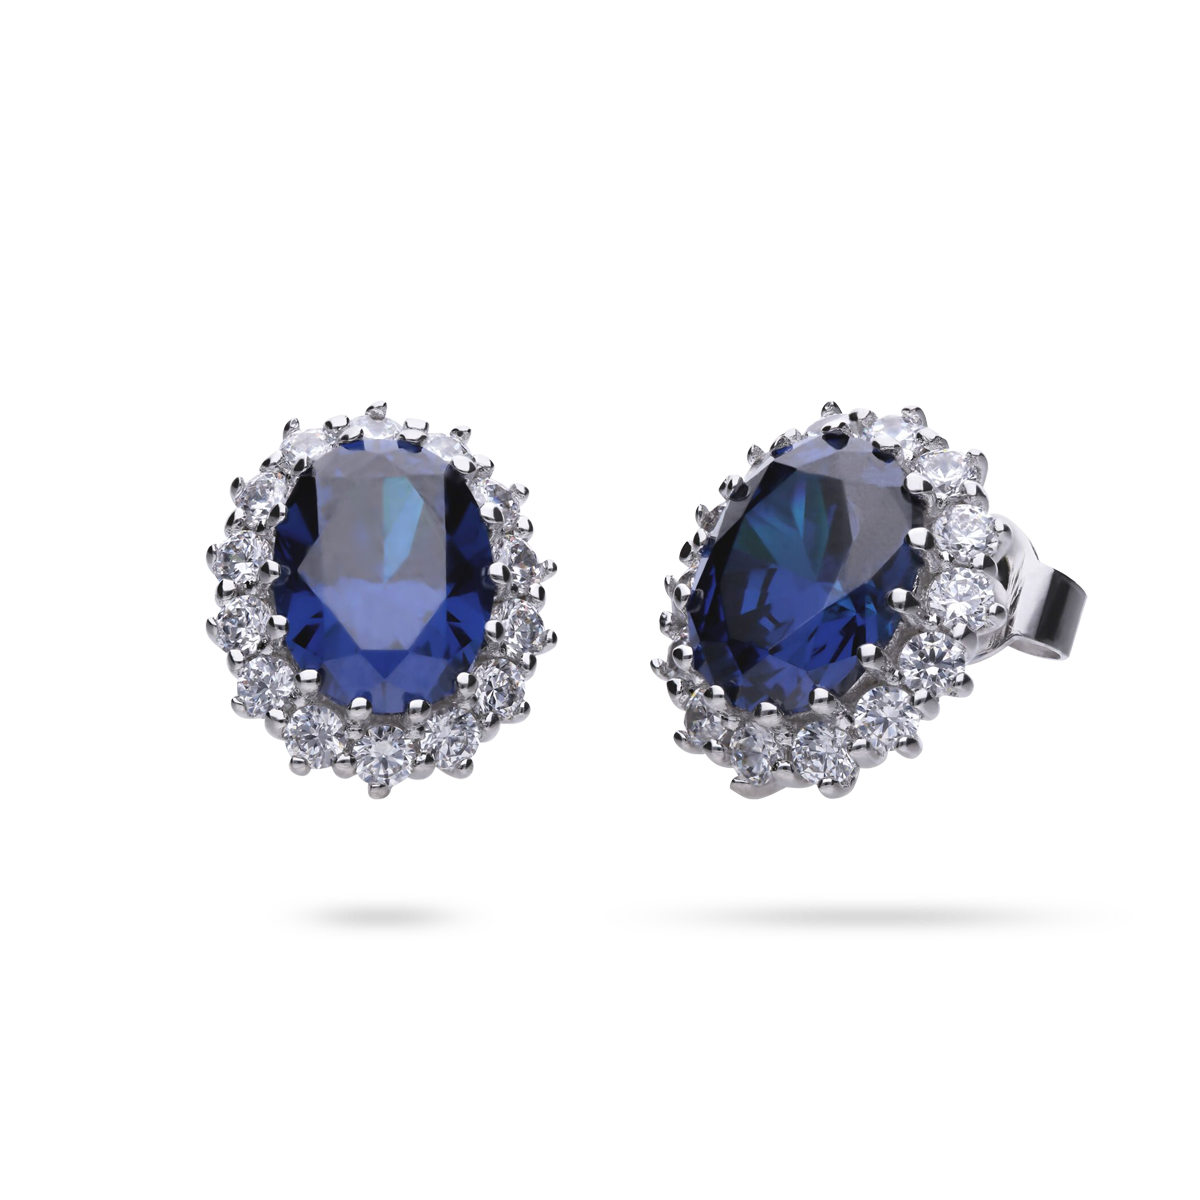 Sterling Silver Oval Shaped Blue Cubic Zirconia Cluster Stud Earrings